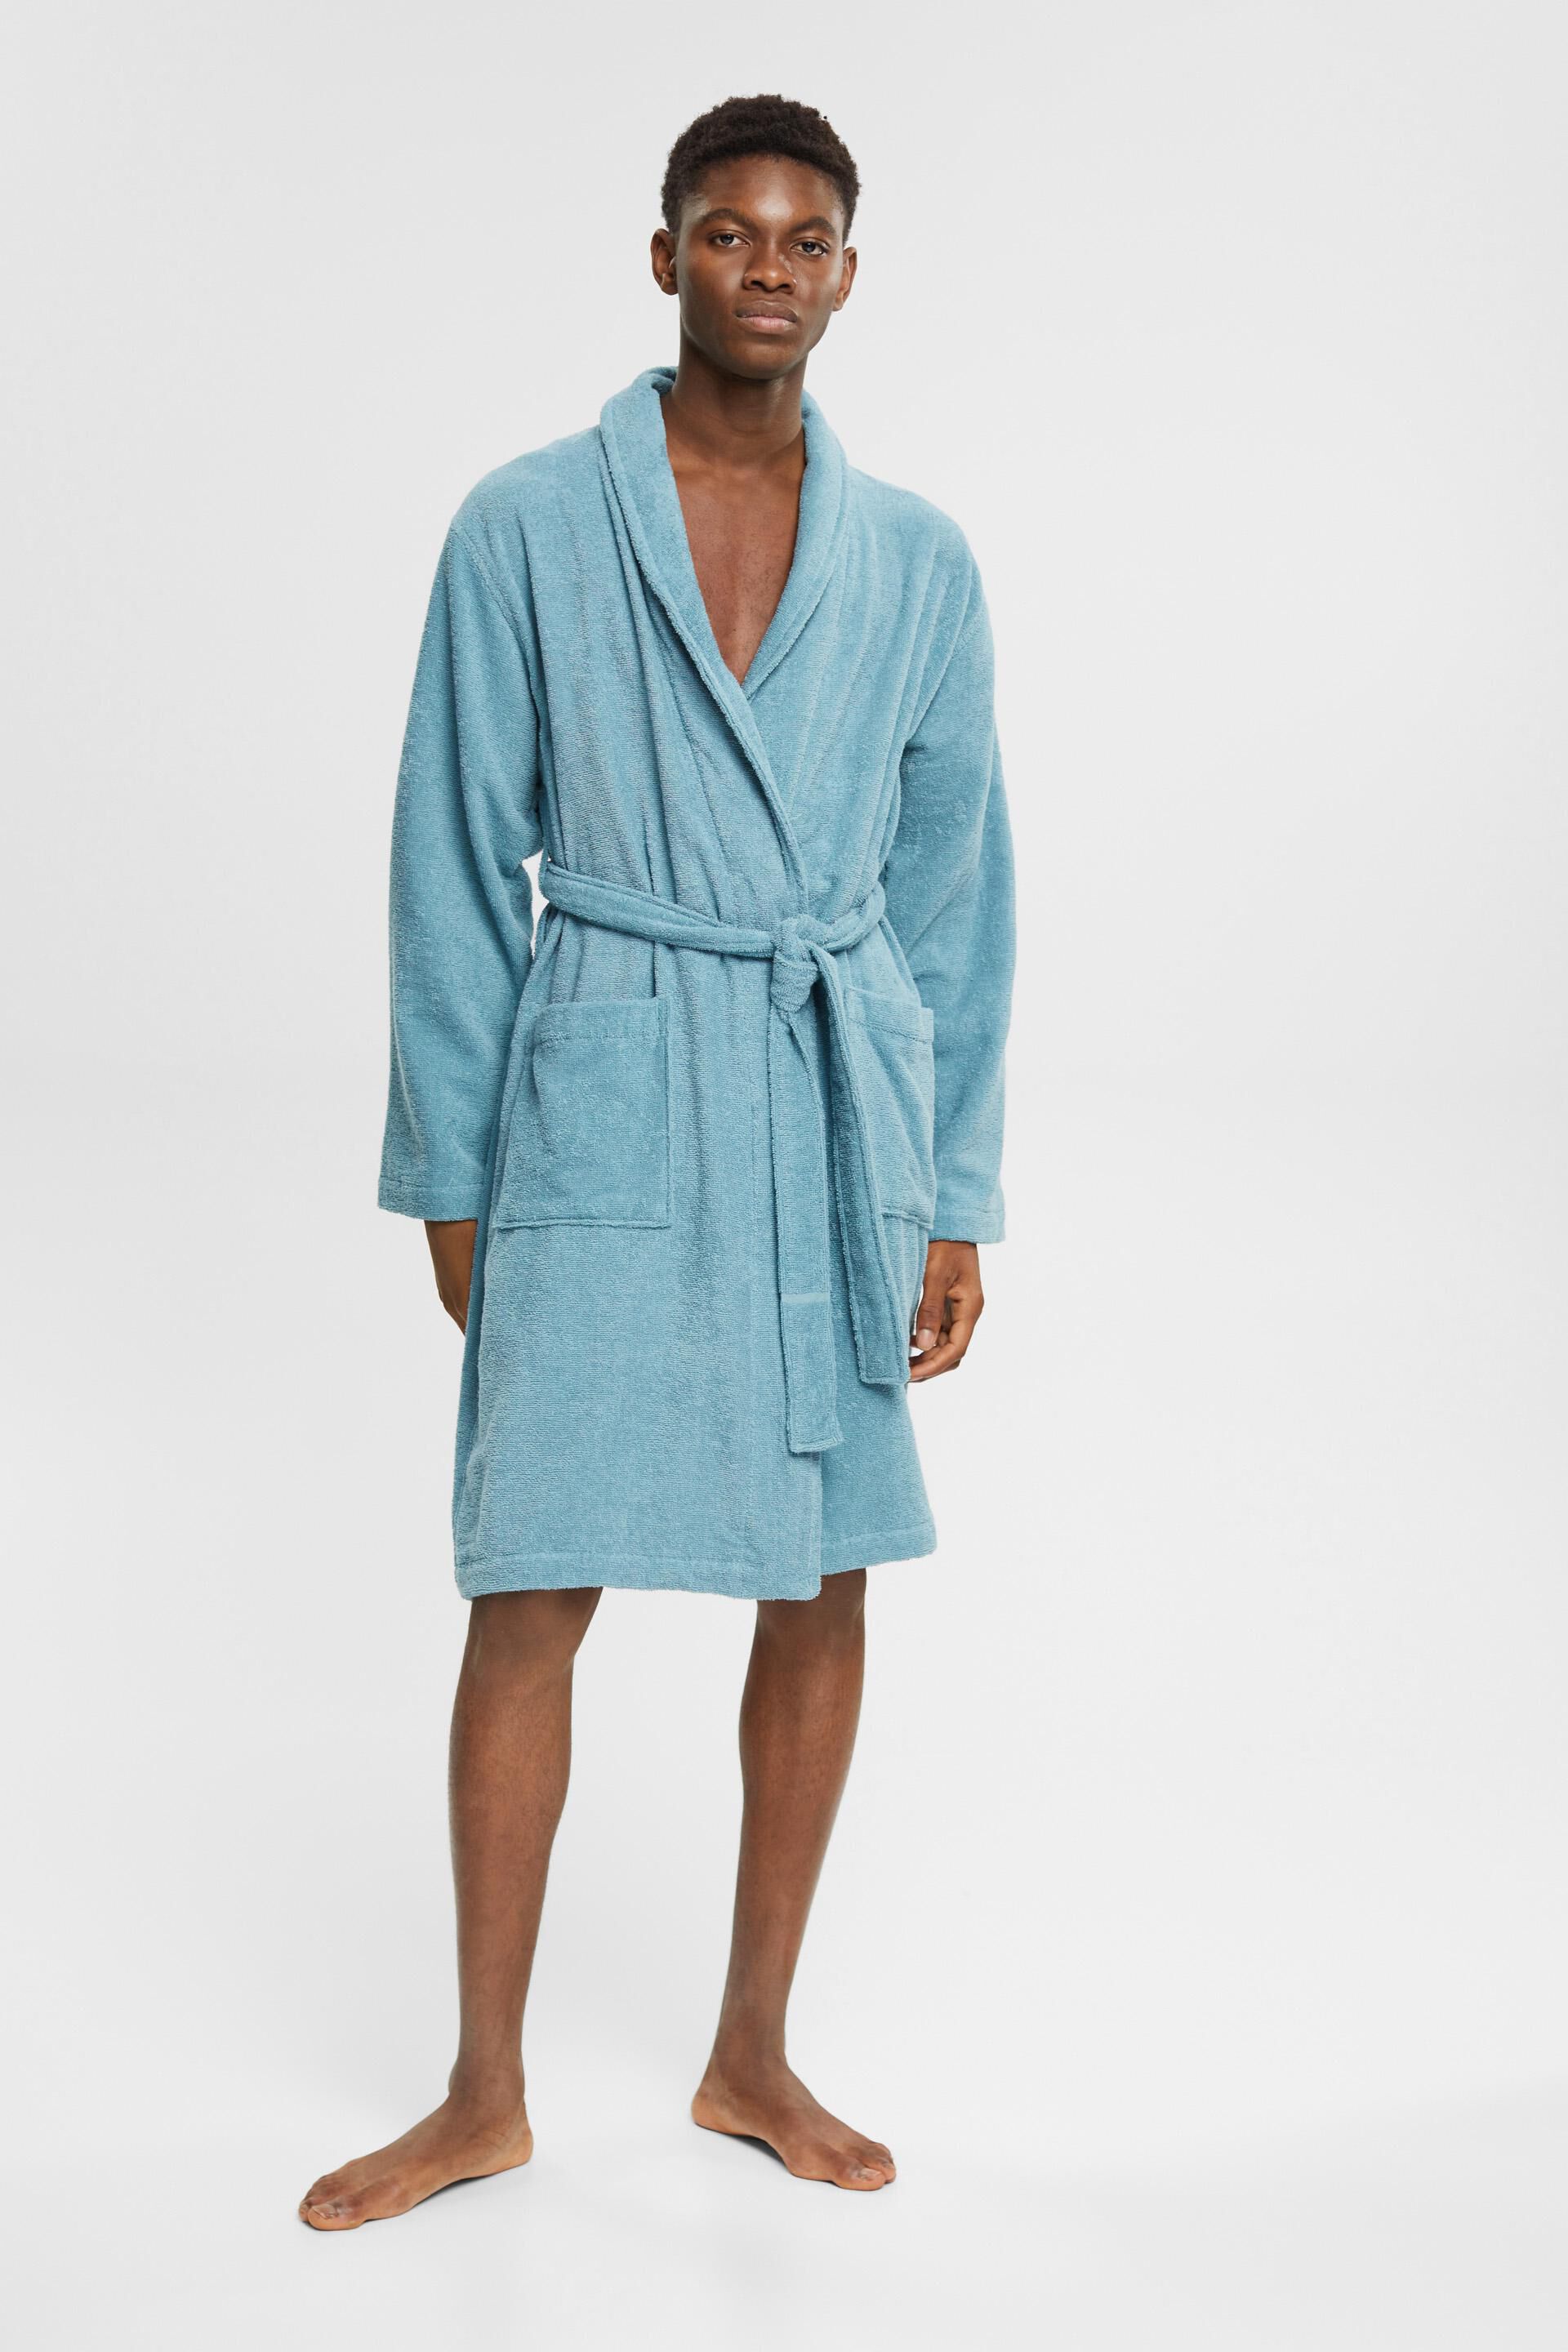 Esprit bathrobe, cotton 100% Unisex